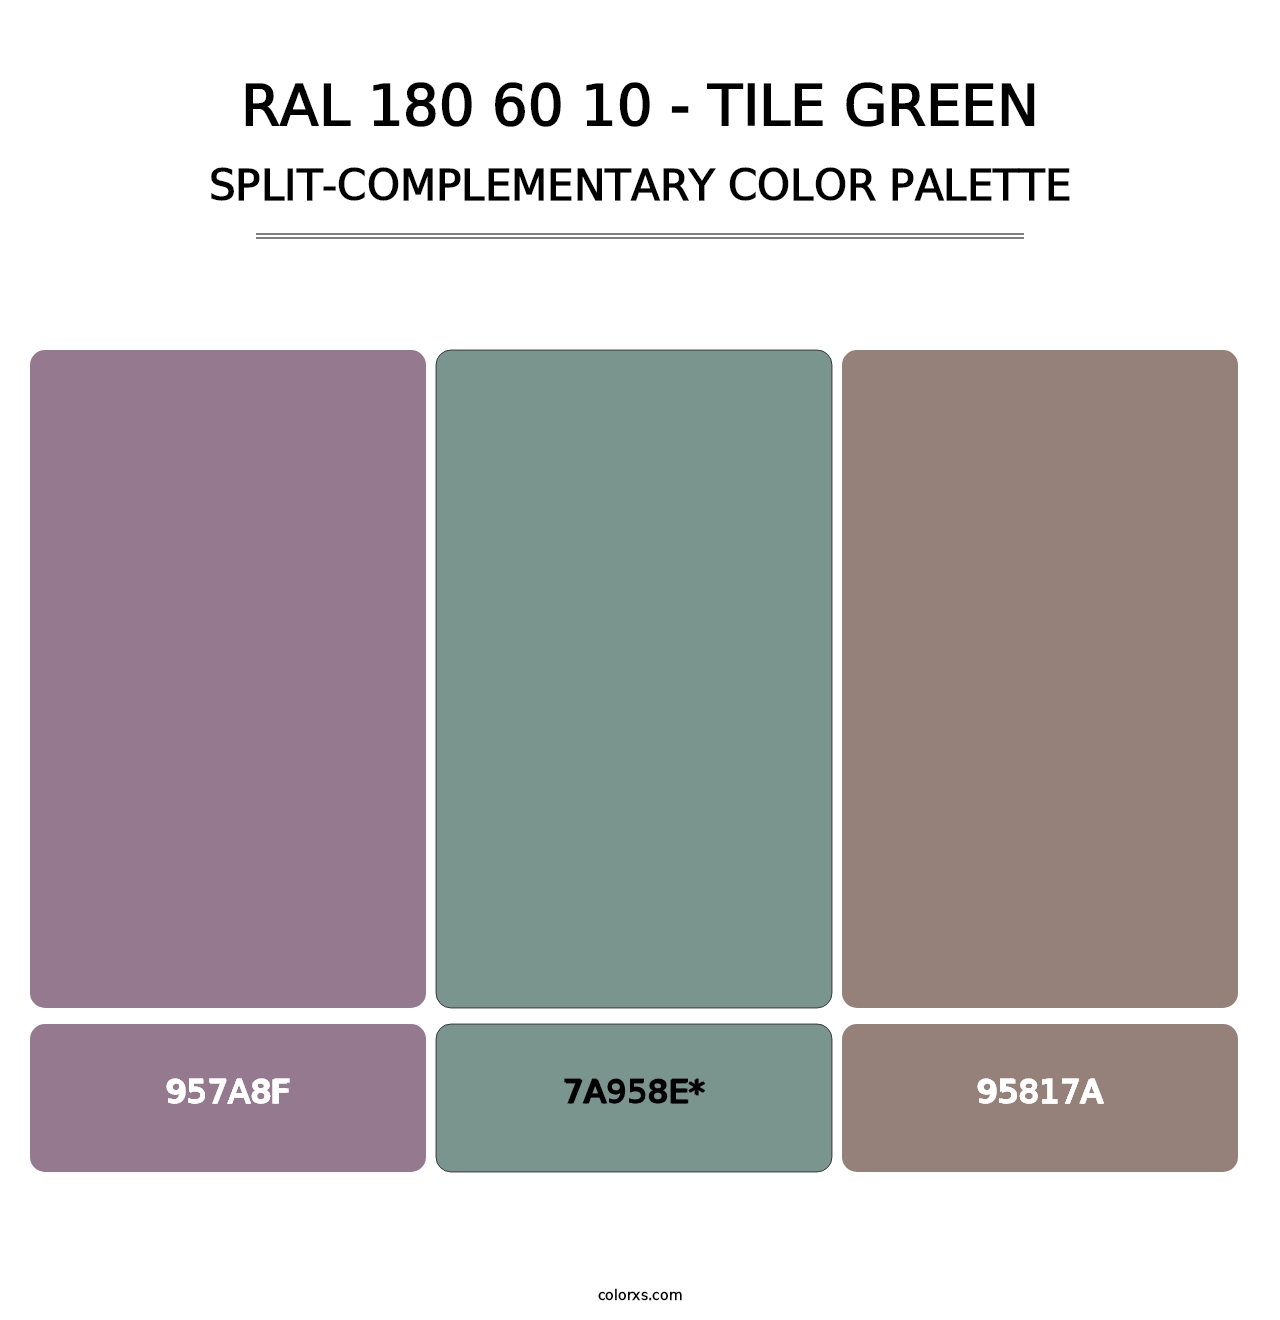 RAL 180 60 10 - Tile Green - Split-Complementary Color Palette